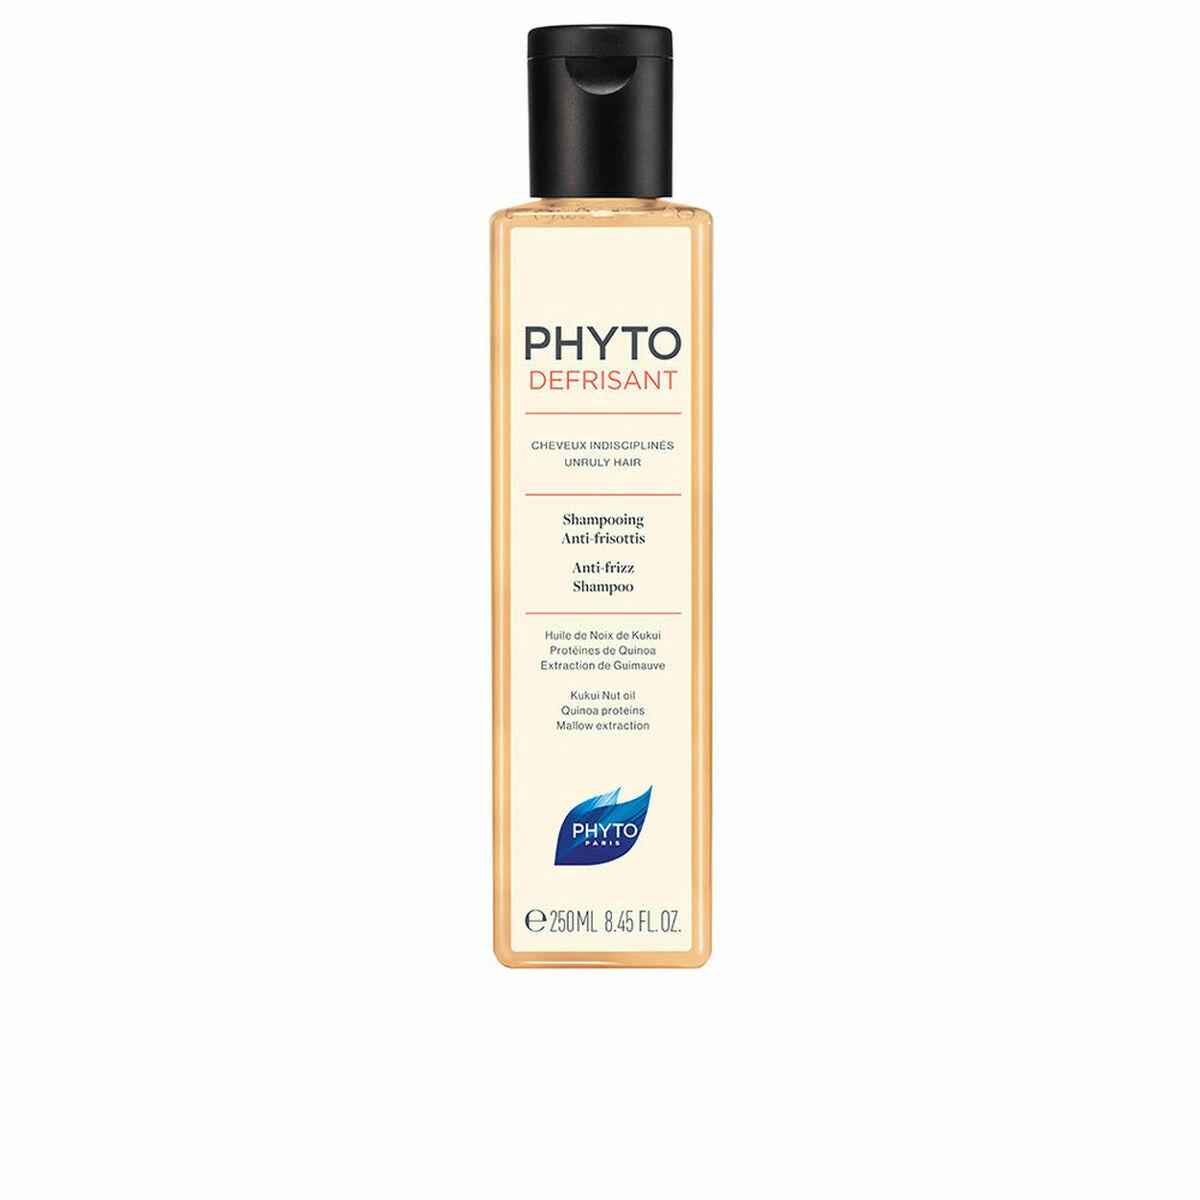 Billede af Antikrus shampoo Phyto Paris Phytodefrisant (250 ml)